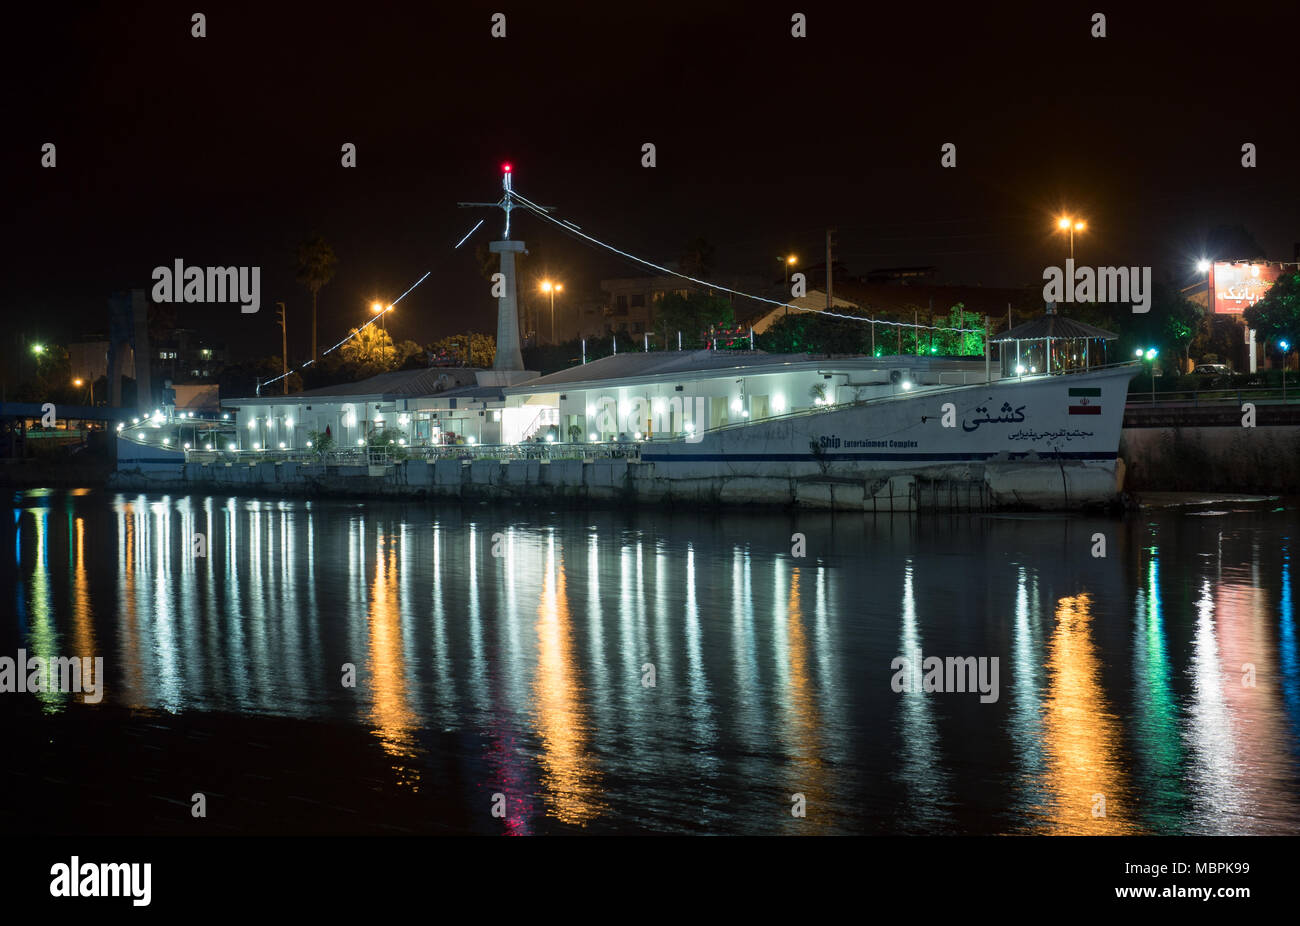 Floating restaurant ship by night, Babolsar, Iran Stock Photo